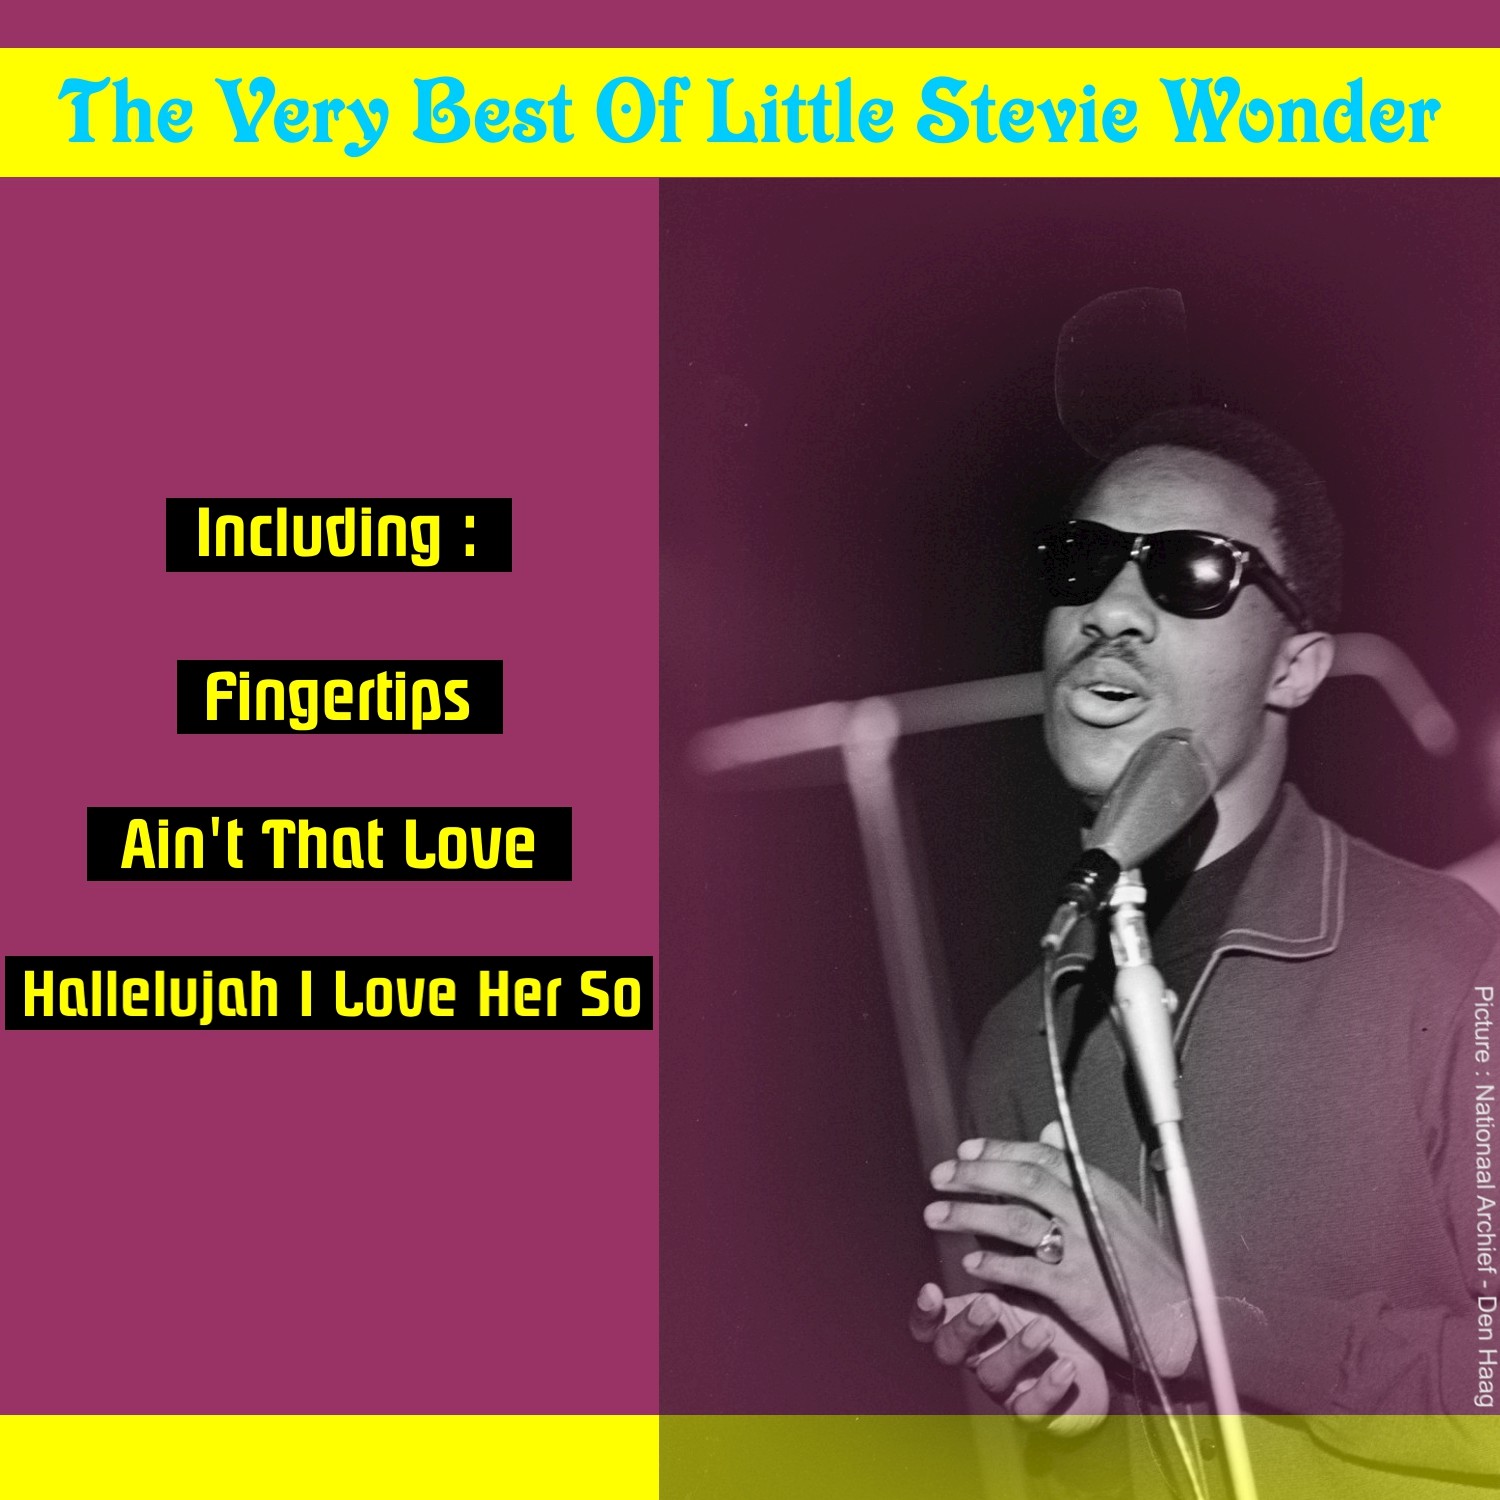 The Very Best of Little Stevie Wonder